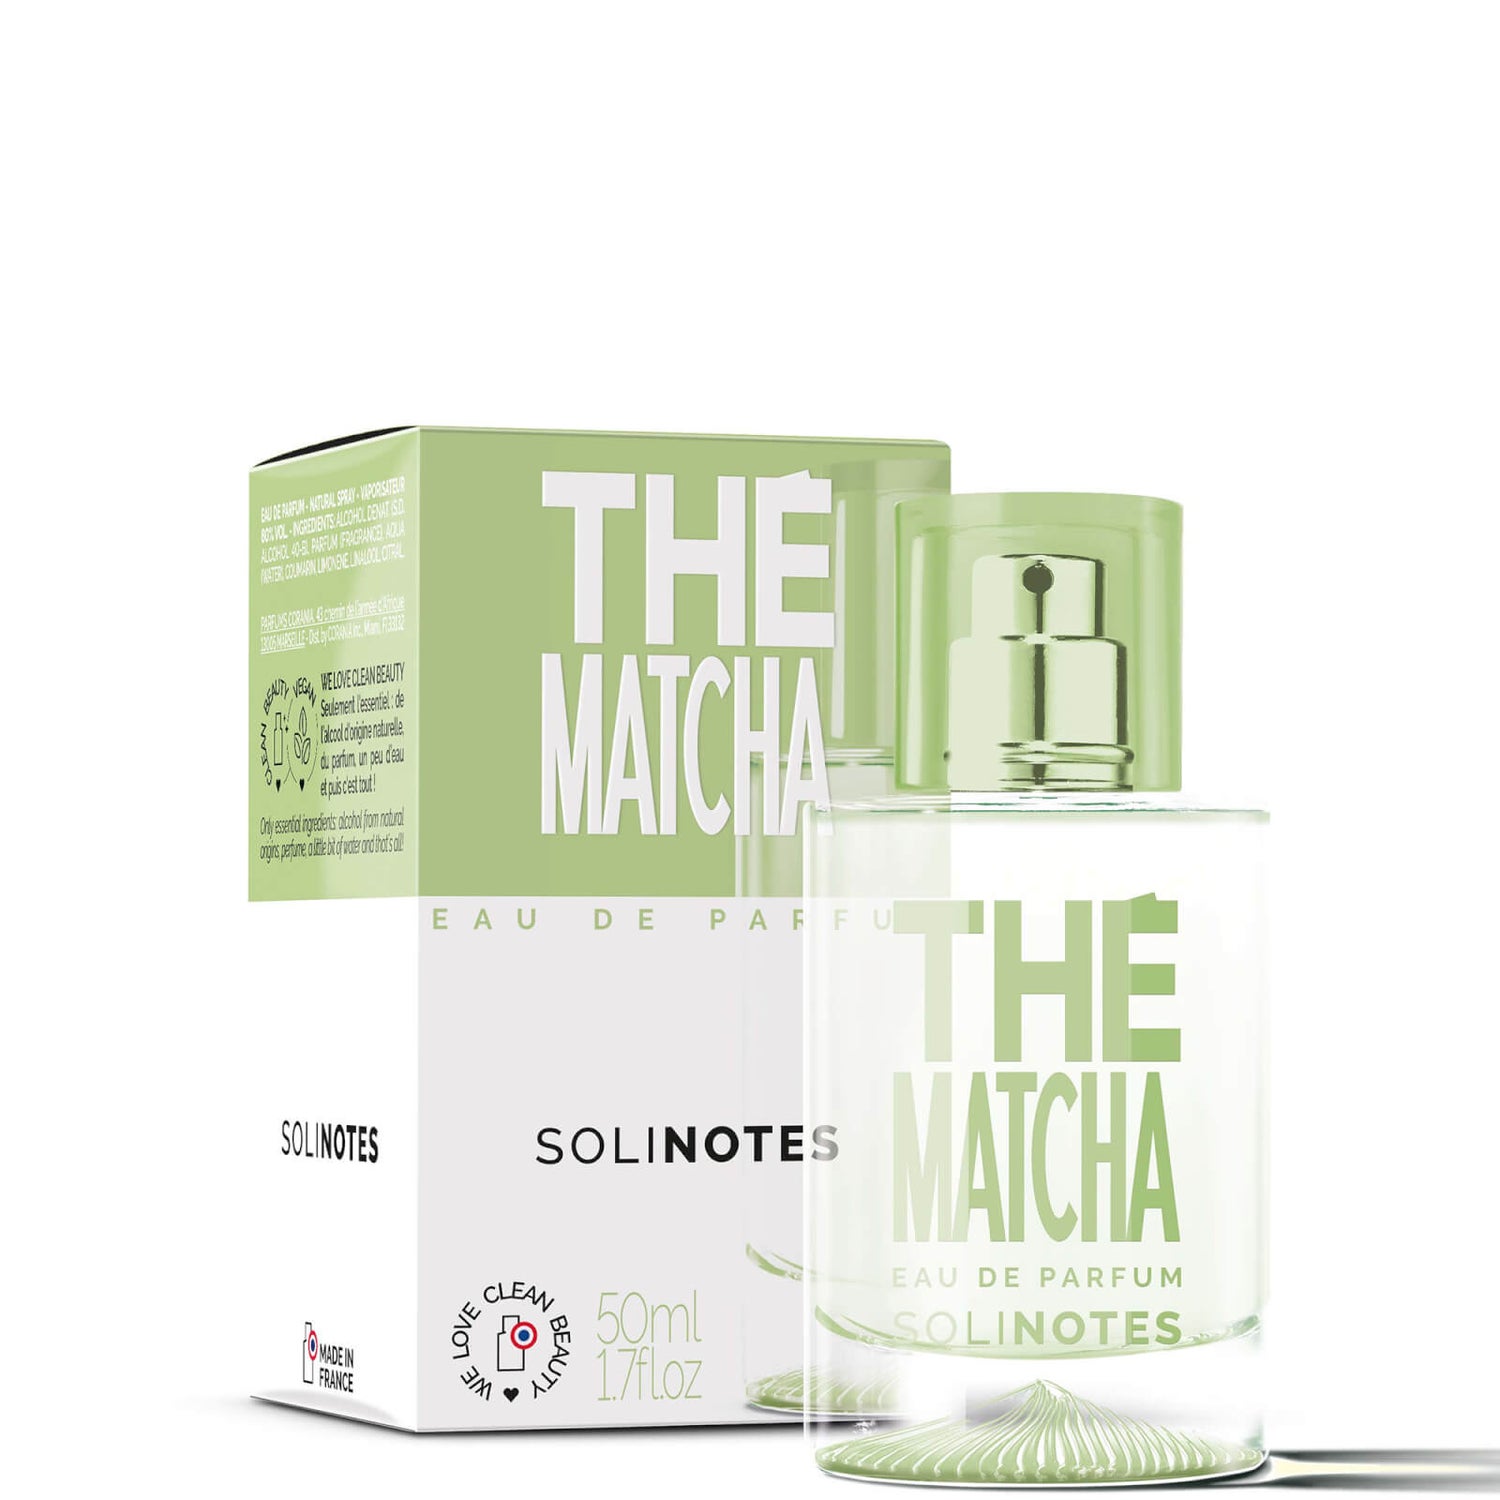 Solinotes Matcha Tea Eau de Parfum 1.7 oz